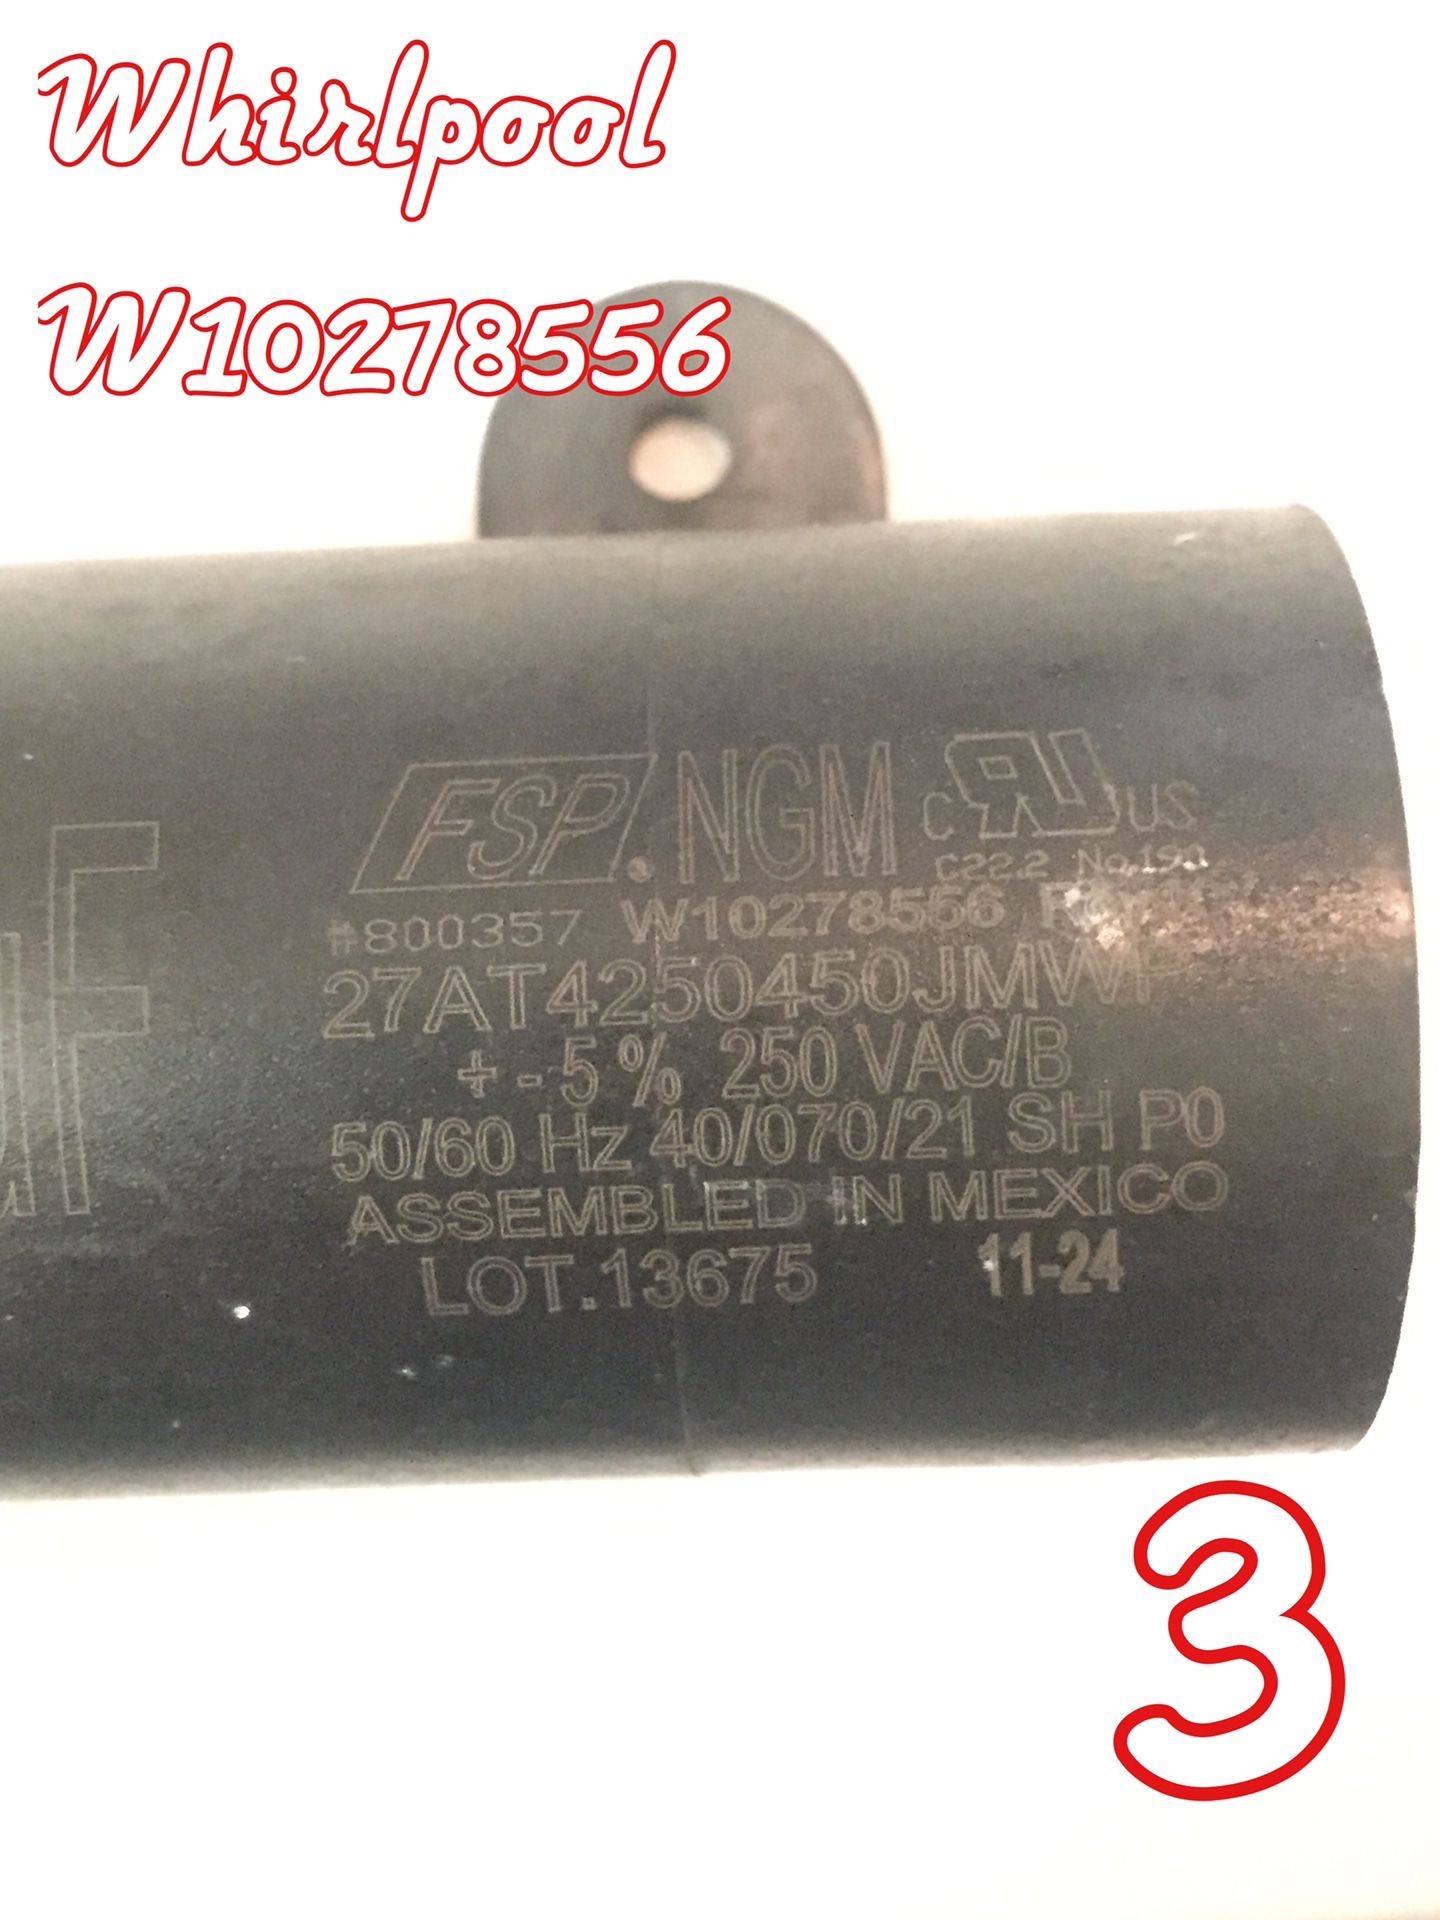 Whirlpool Washer Capacitor W10278556